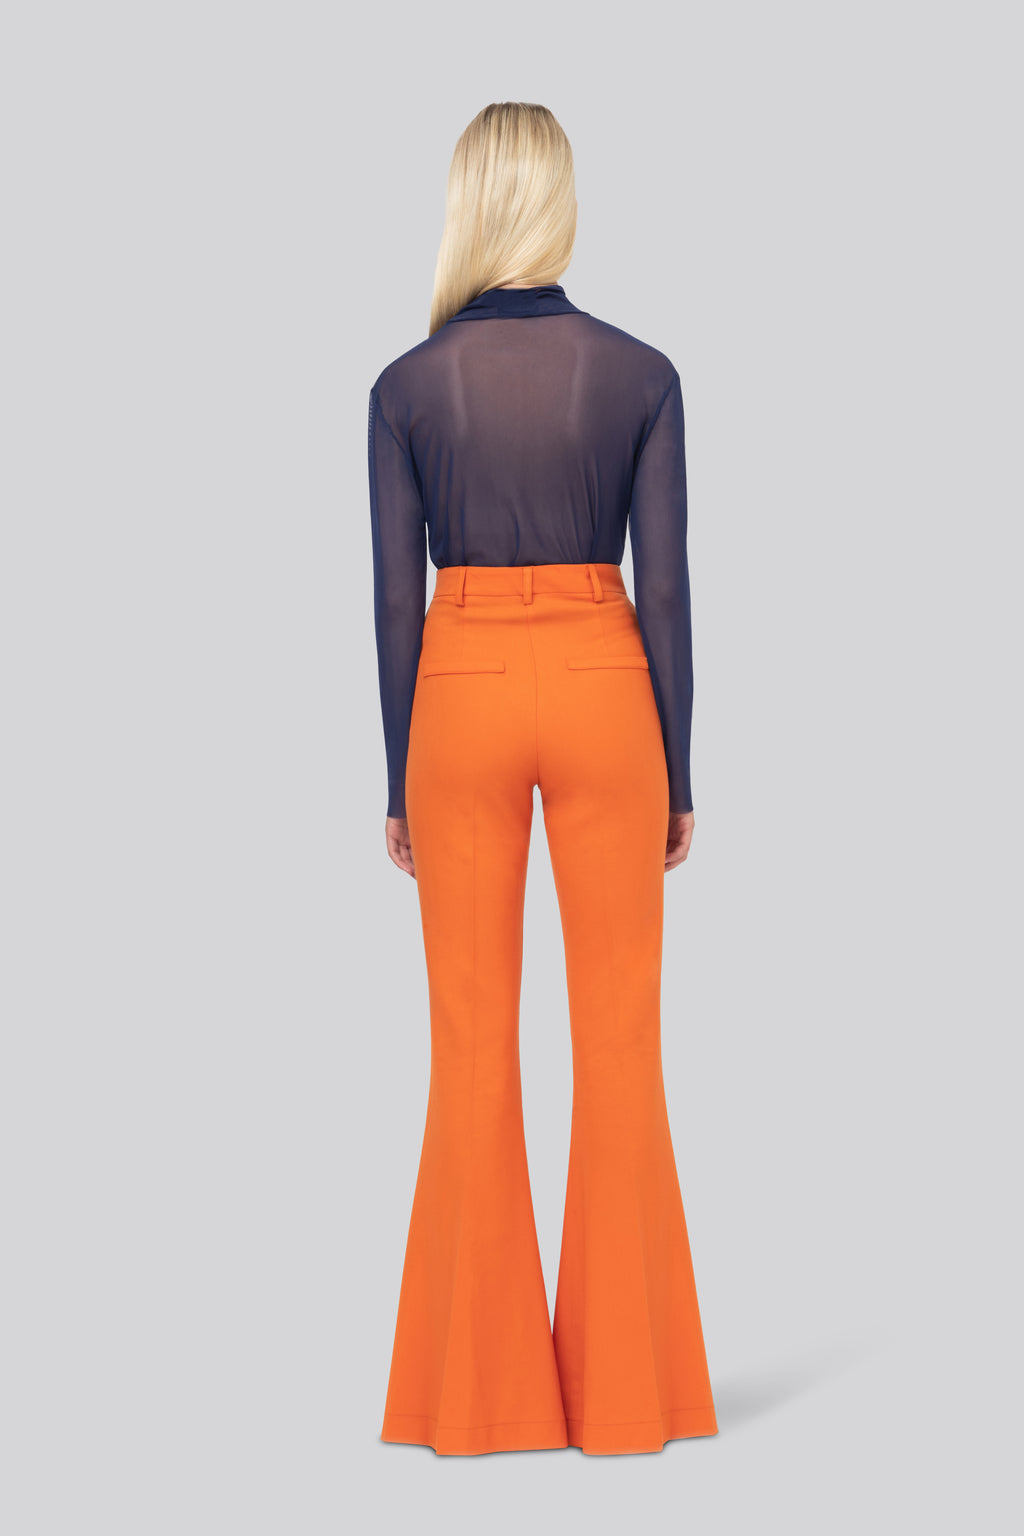 The Orange Wool Bianca Pants